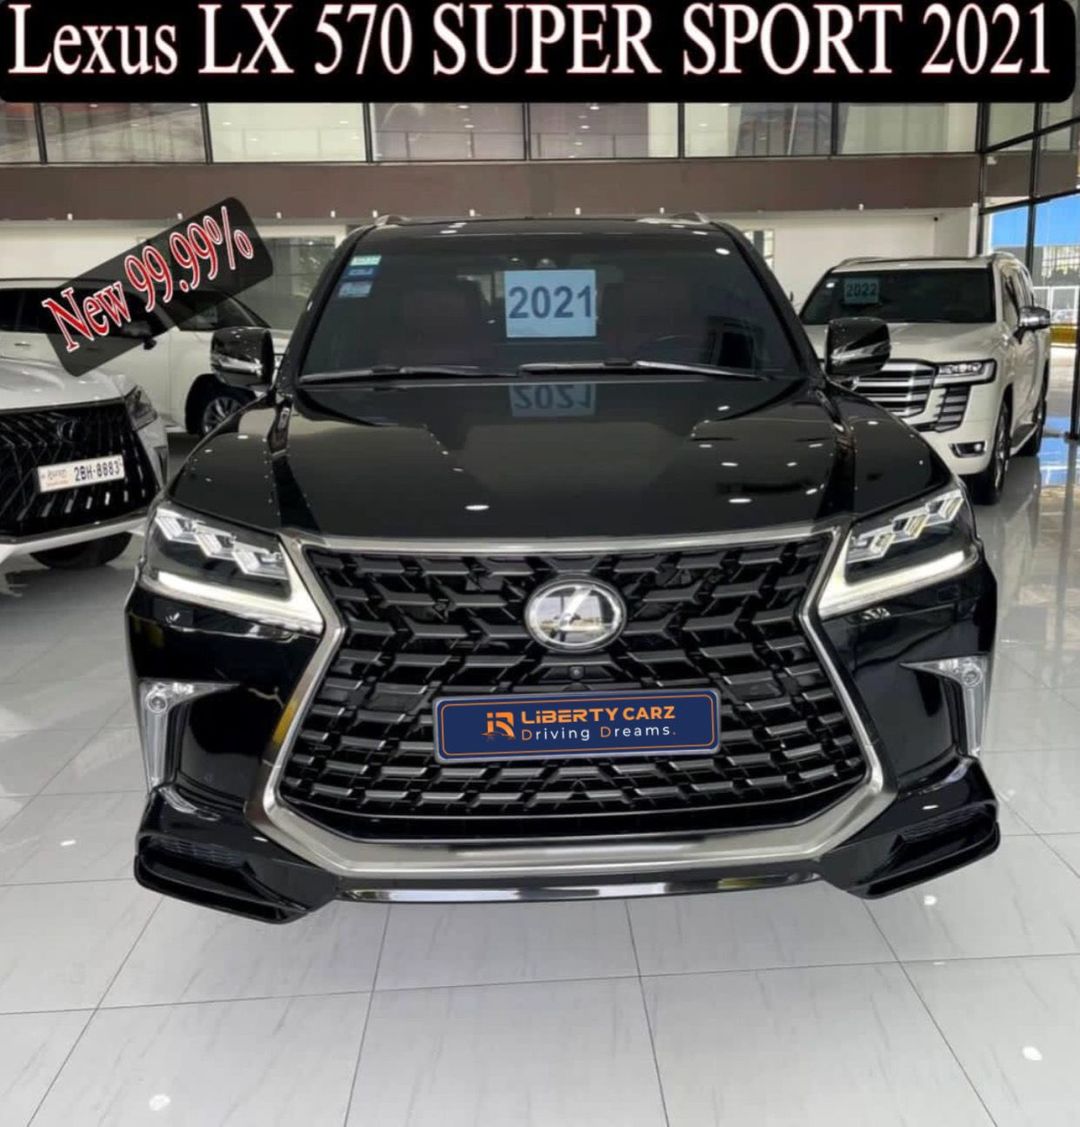 Lexus Super Sport 2021forsale